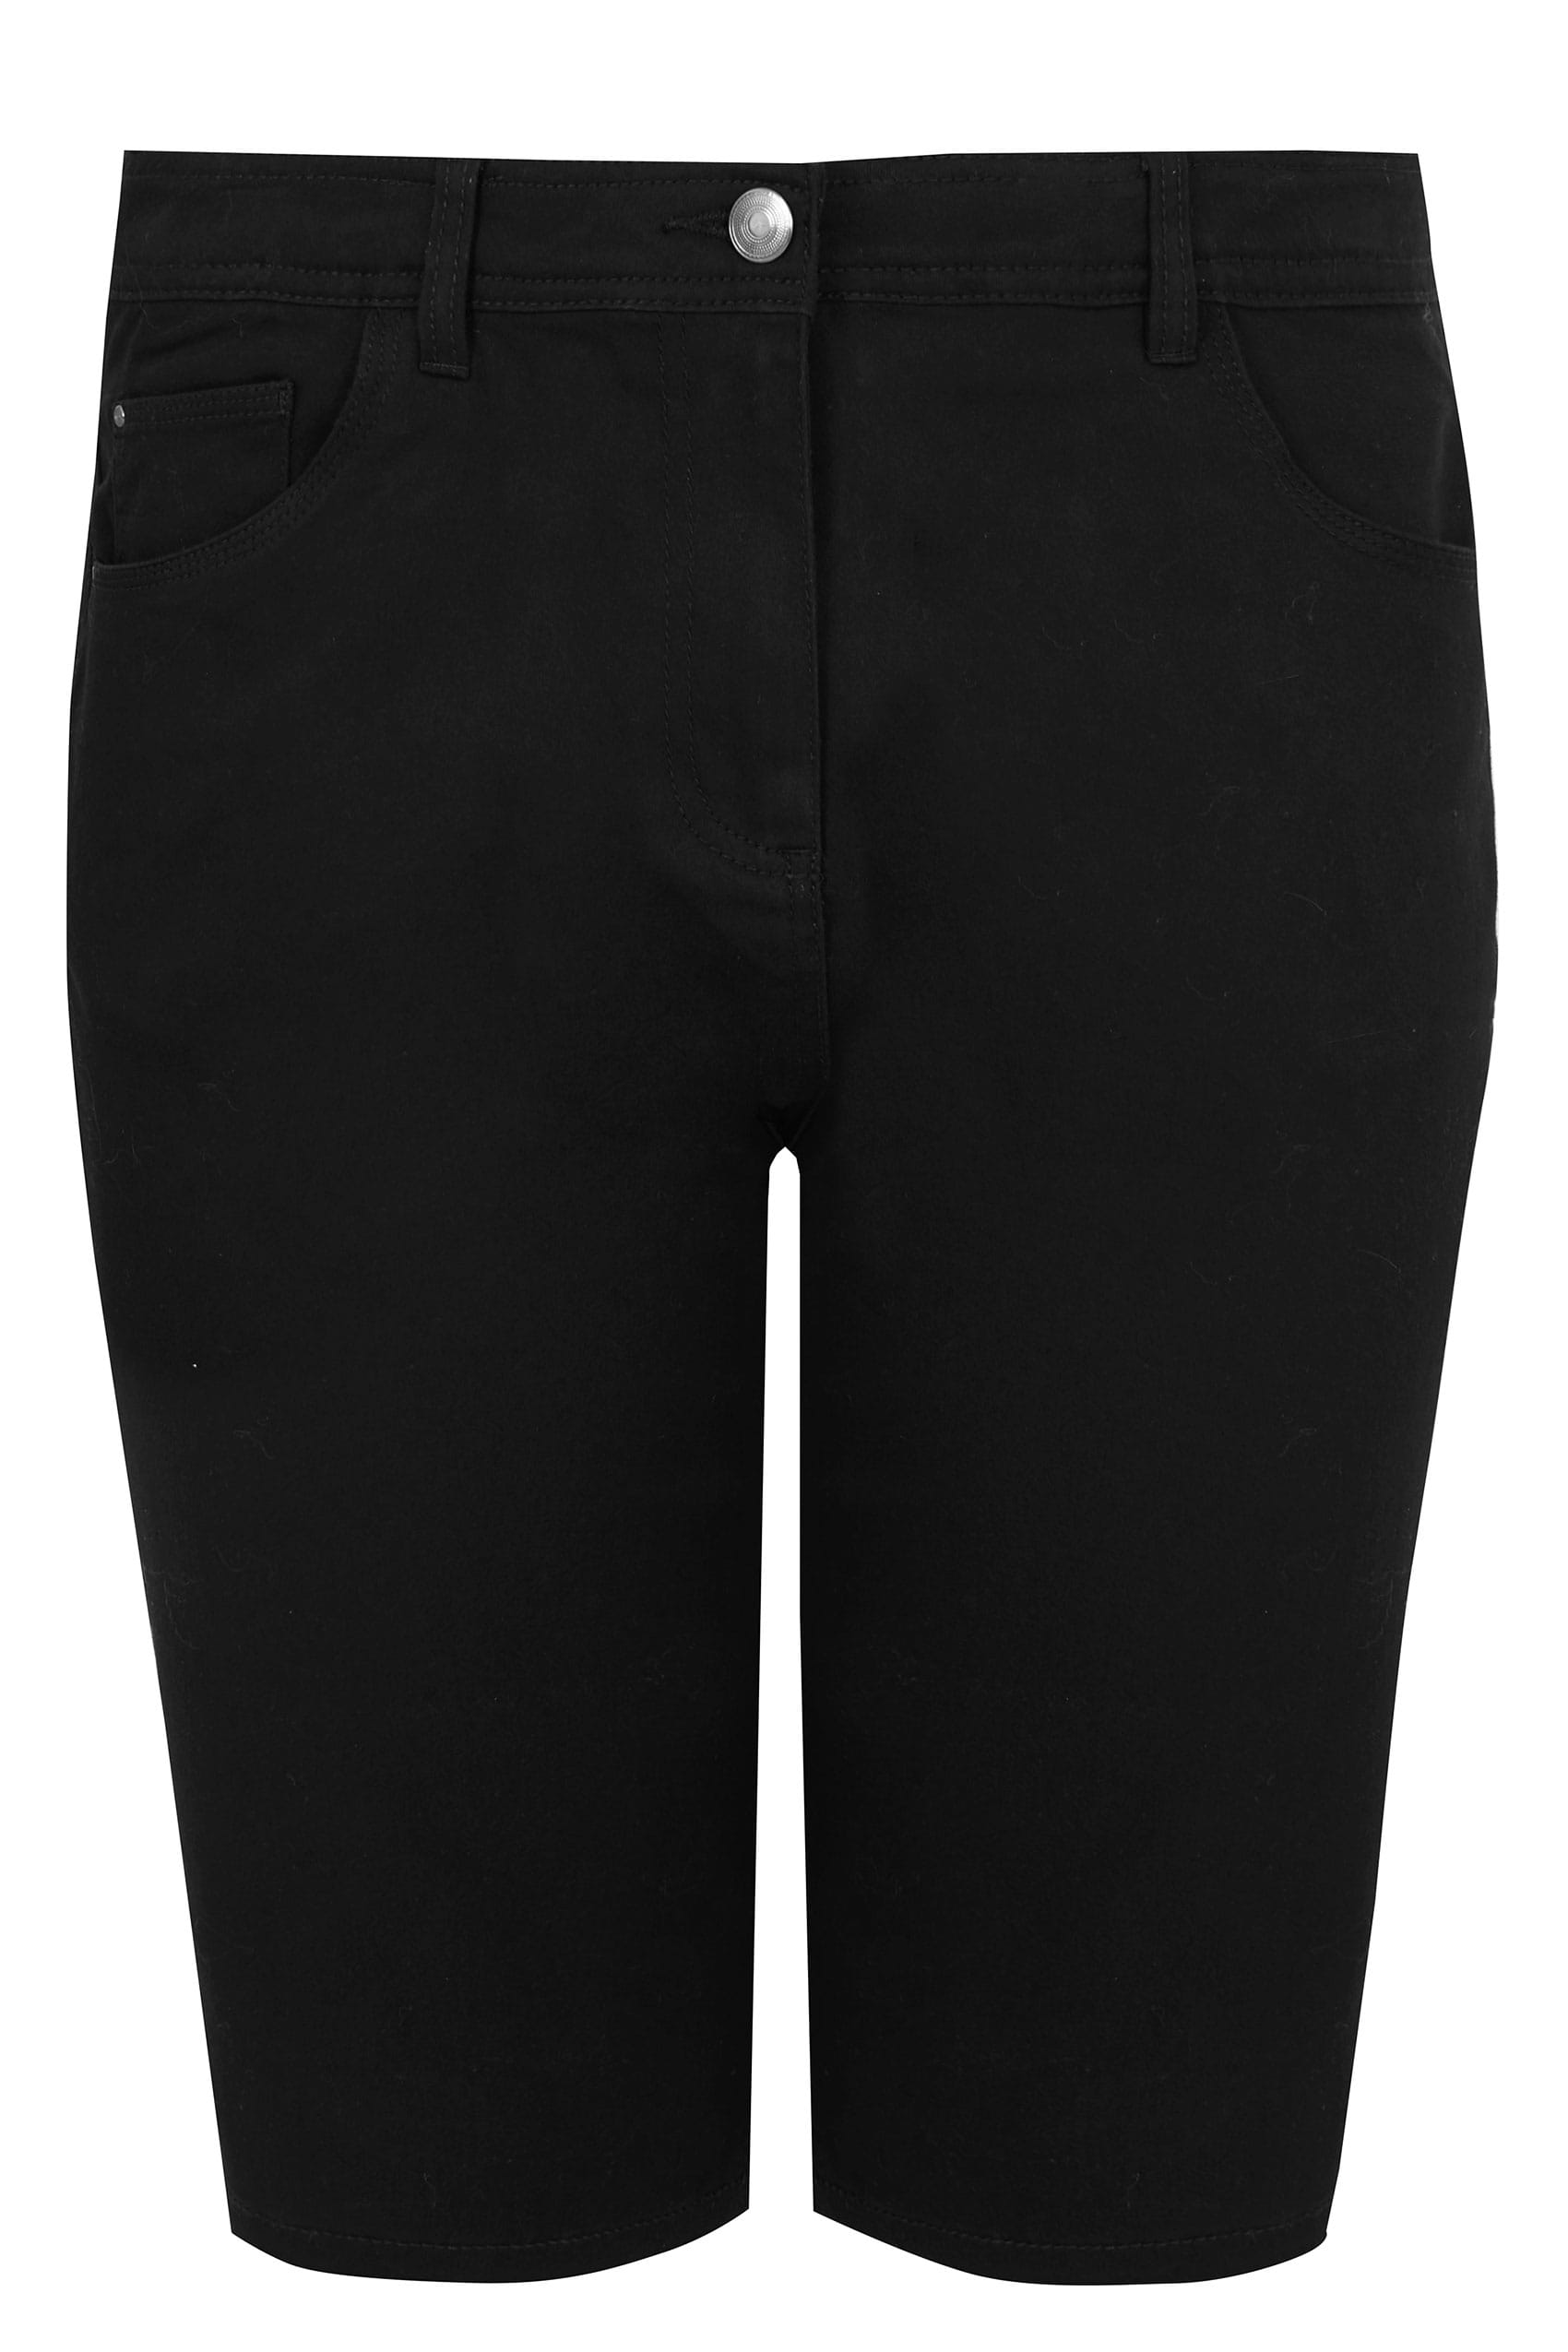 Black Knee Length Shorts, Plus size 16 to 36